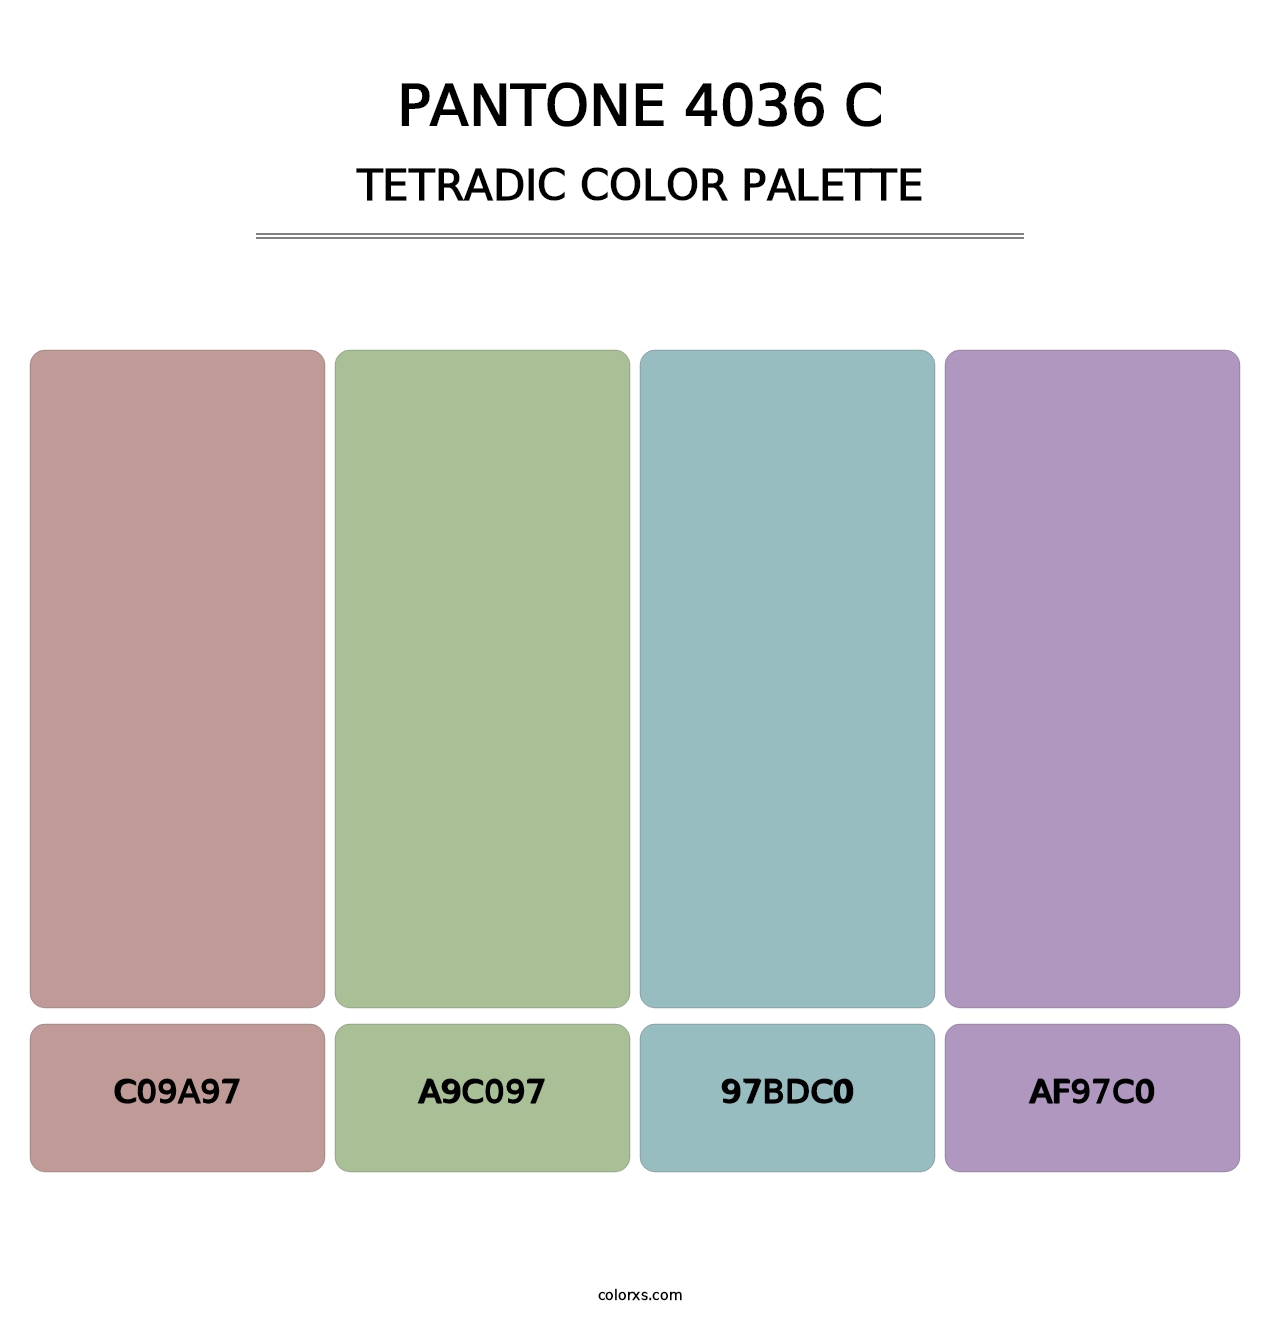 PANTONE 4036 C - Tetradic Color Palette